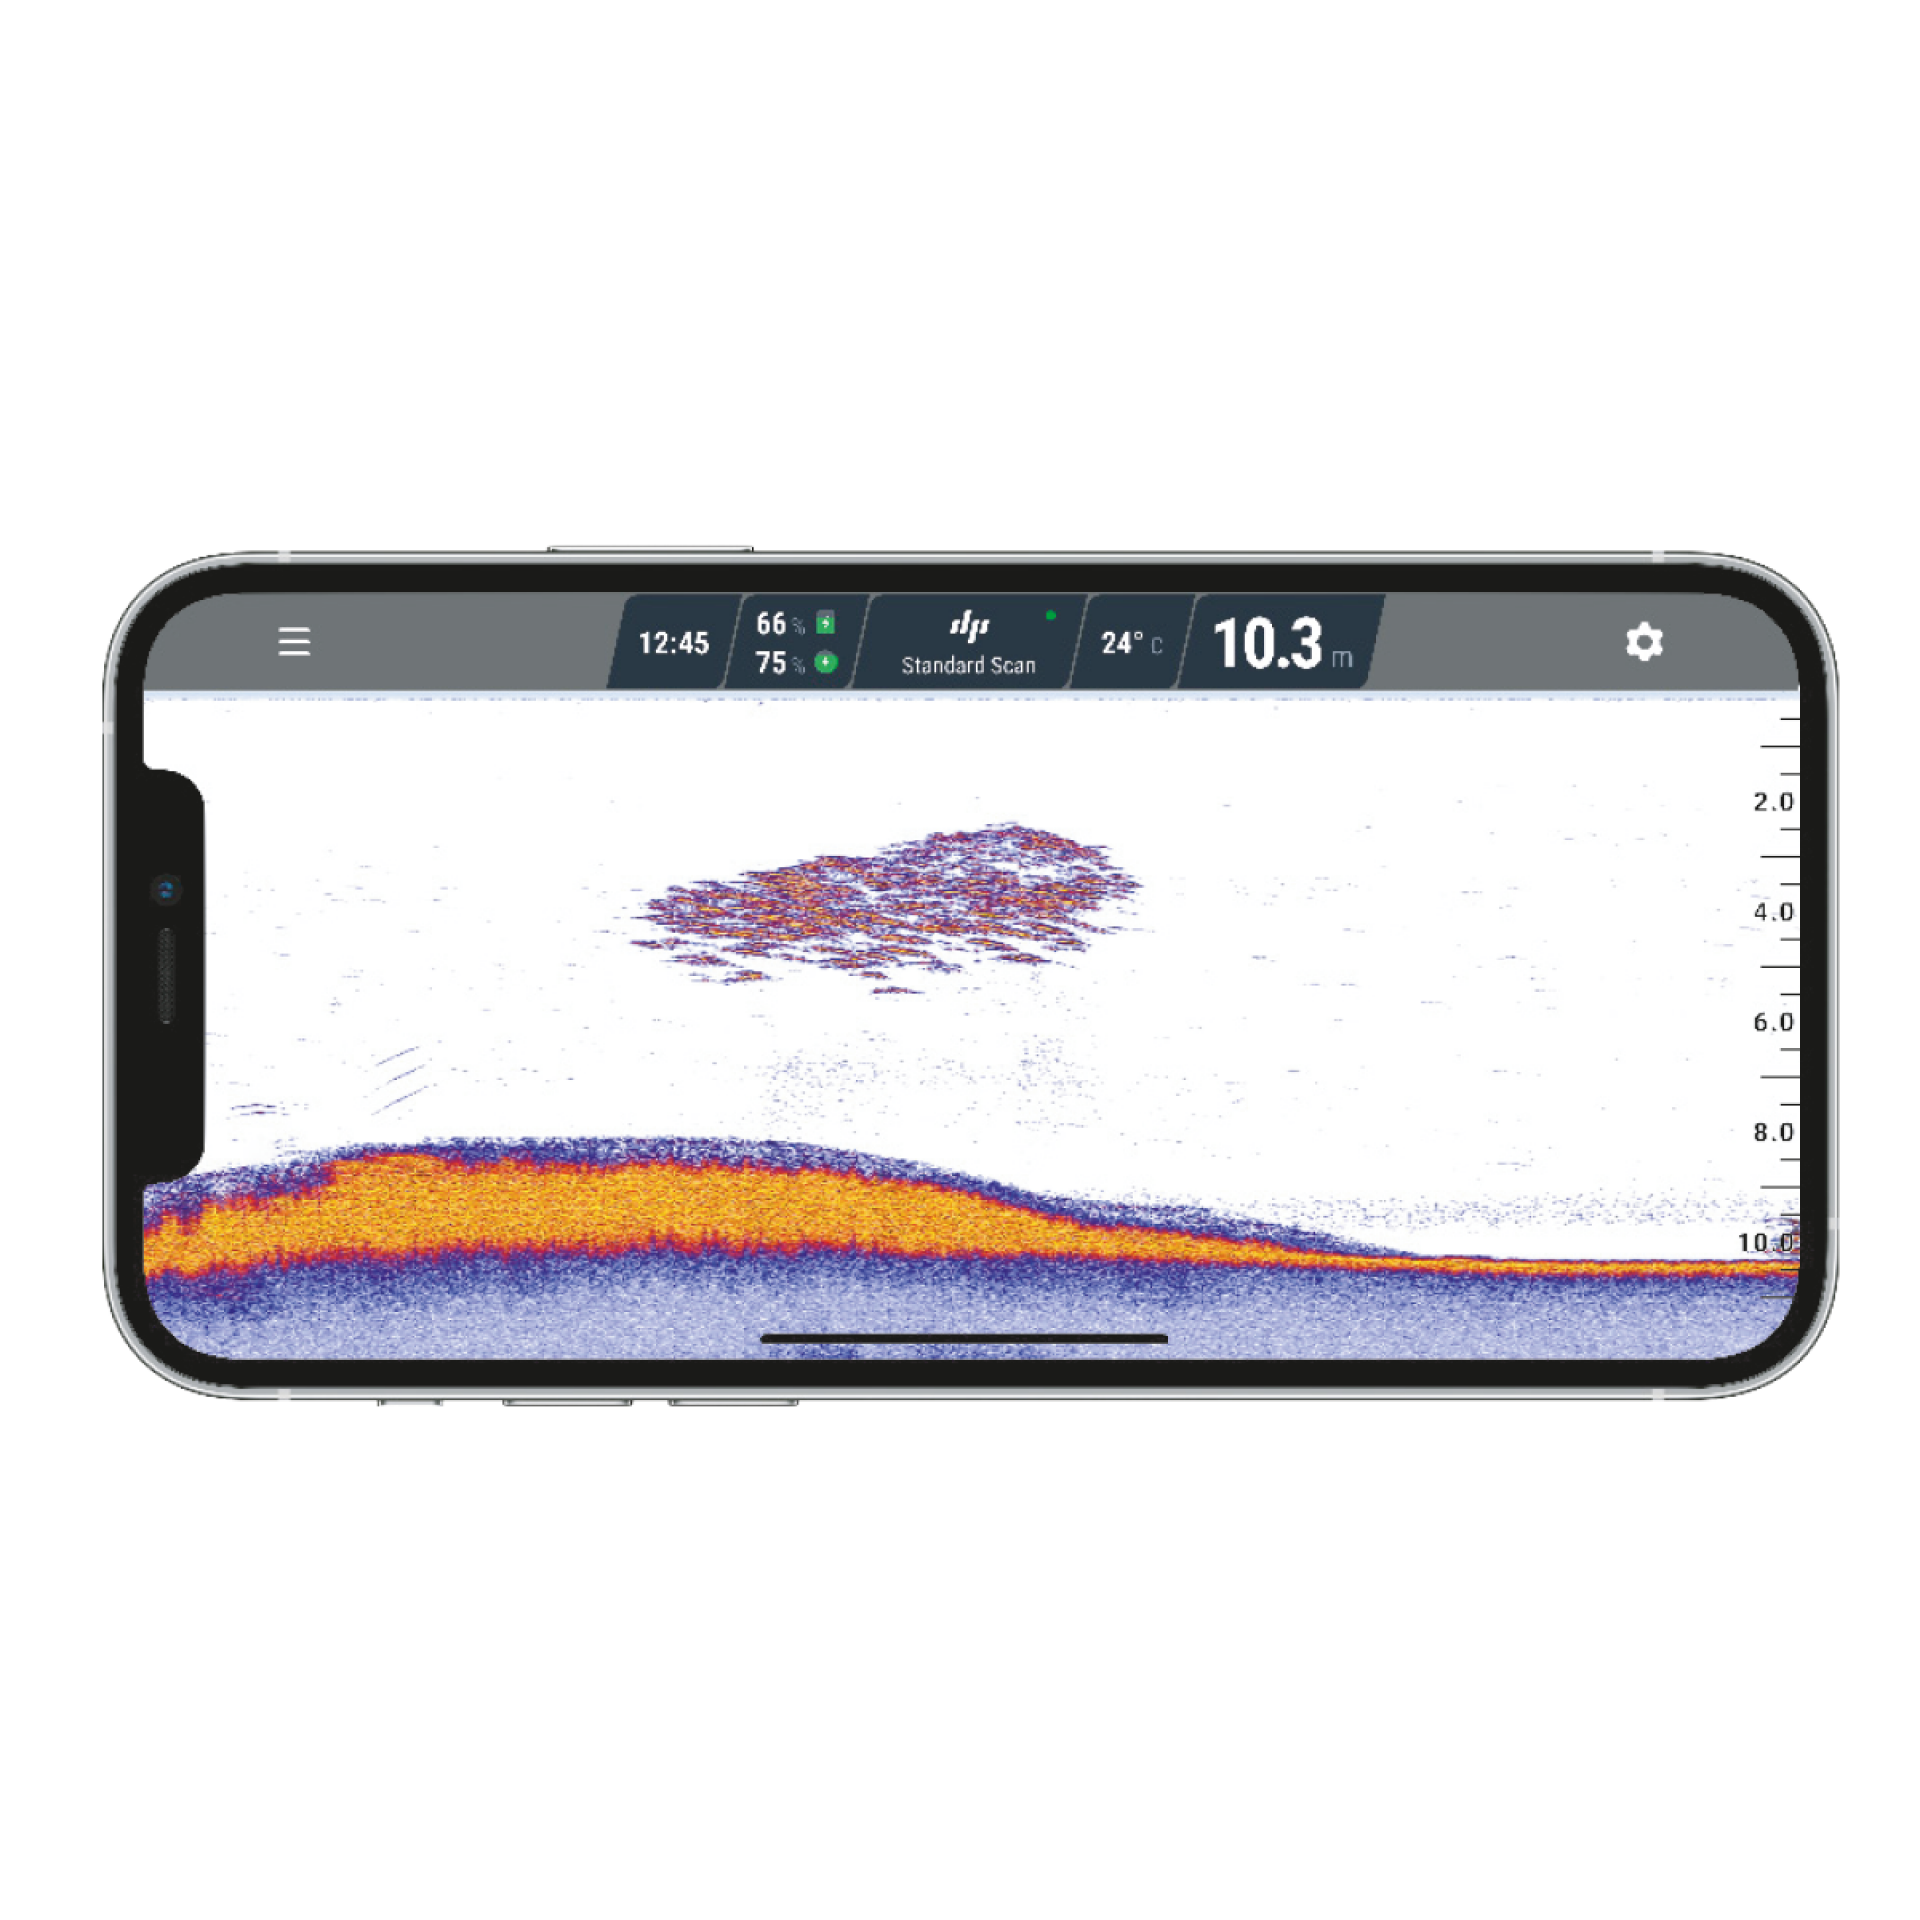 Deeper Sonar CHIRP+ 2 - Wireless GPS Fish Finder